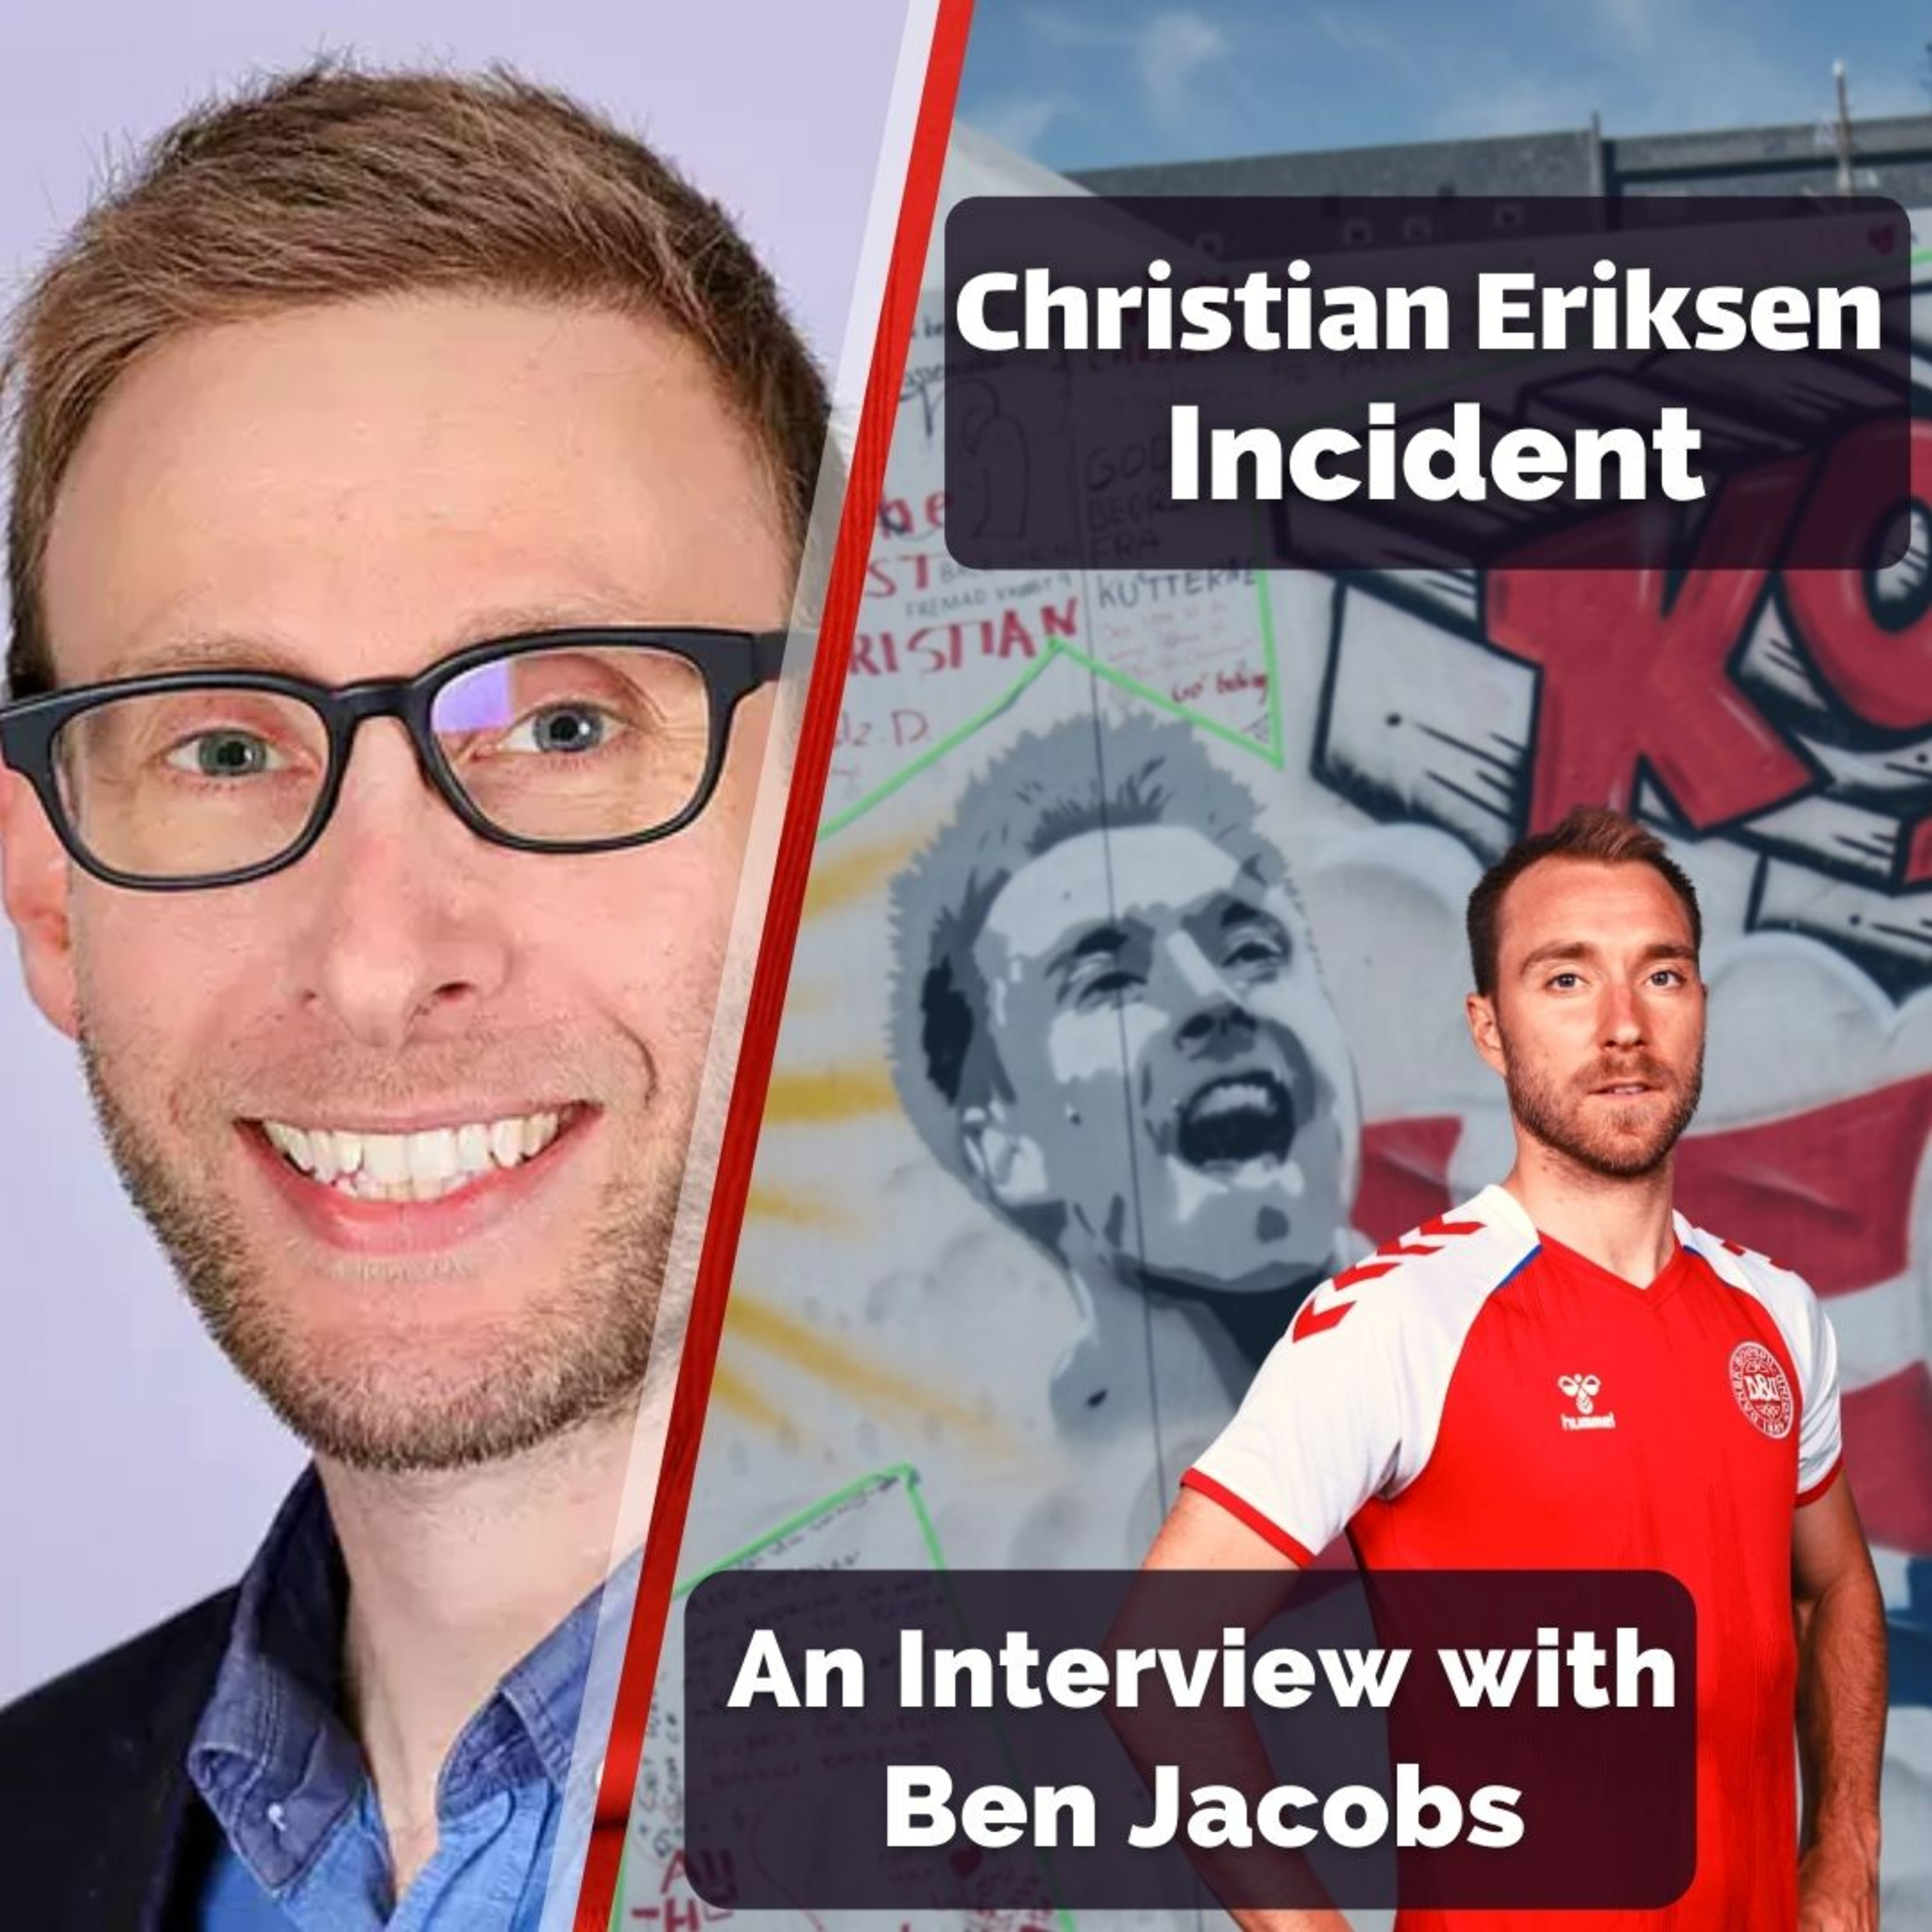 Christian Eriksen’s incident: An Interview with Ben Jacobs